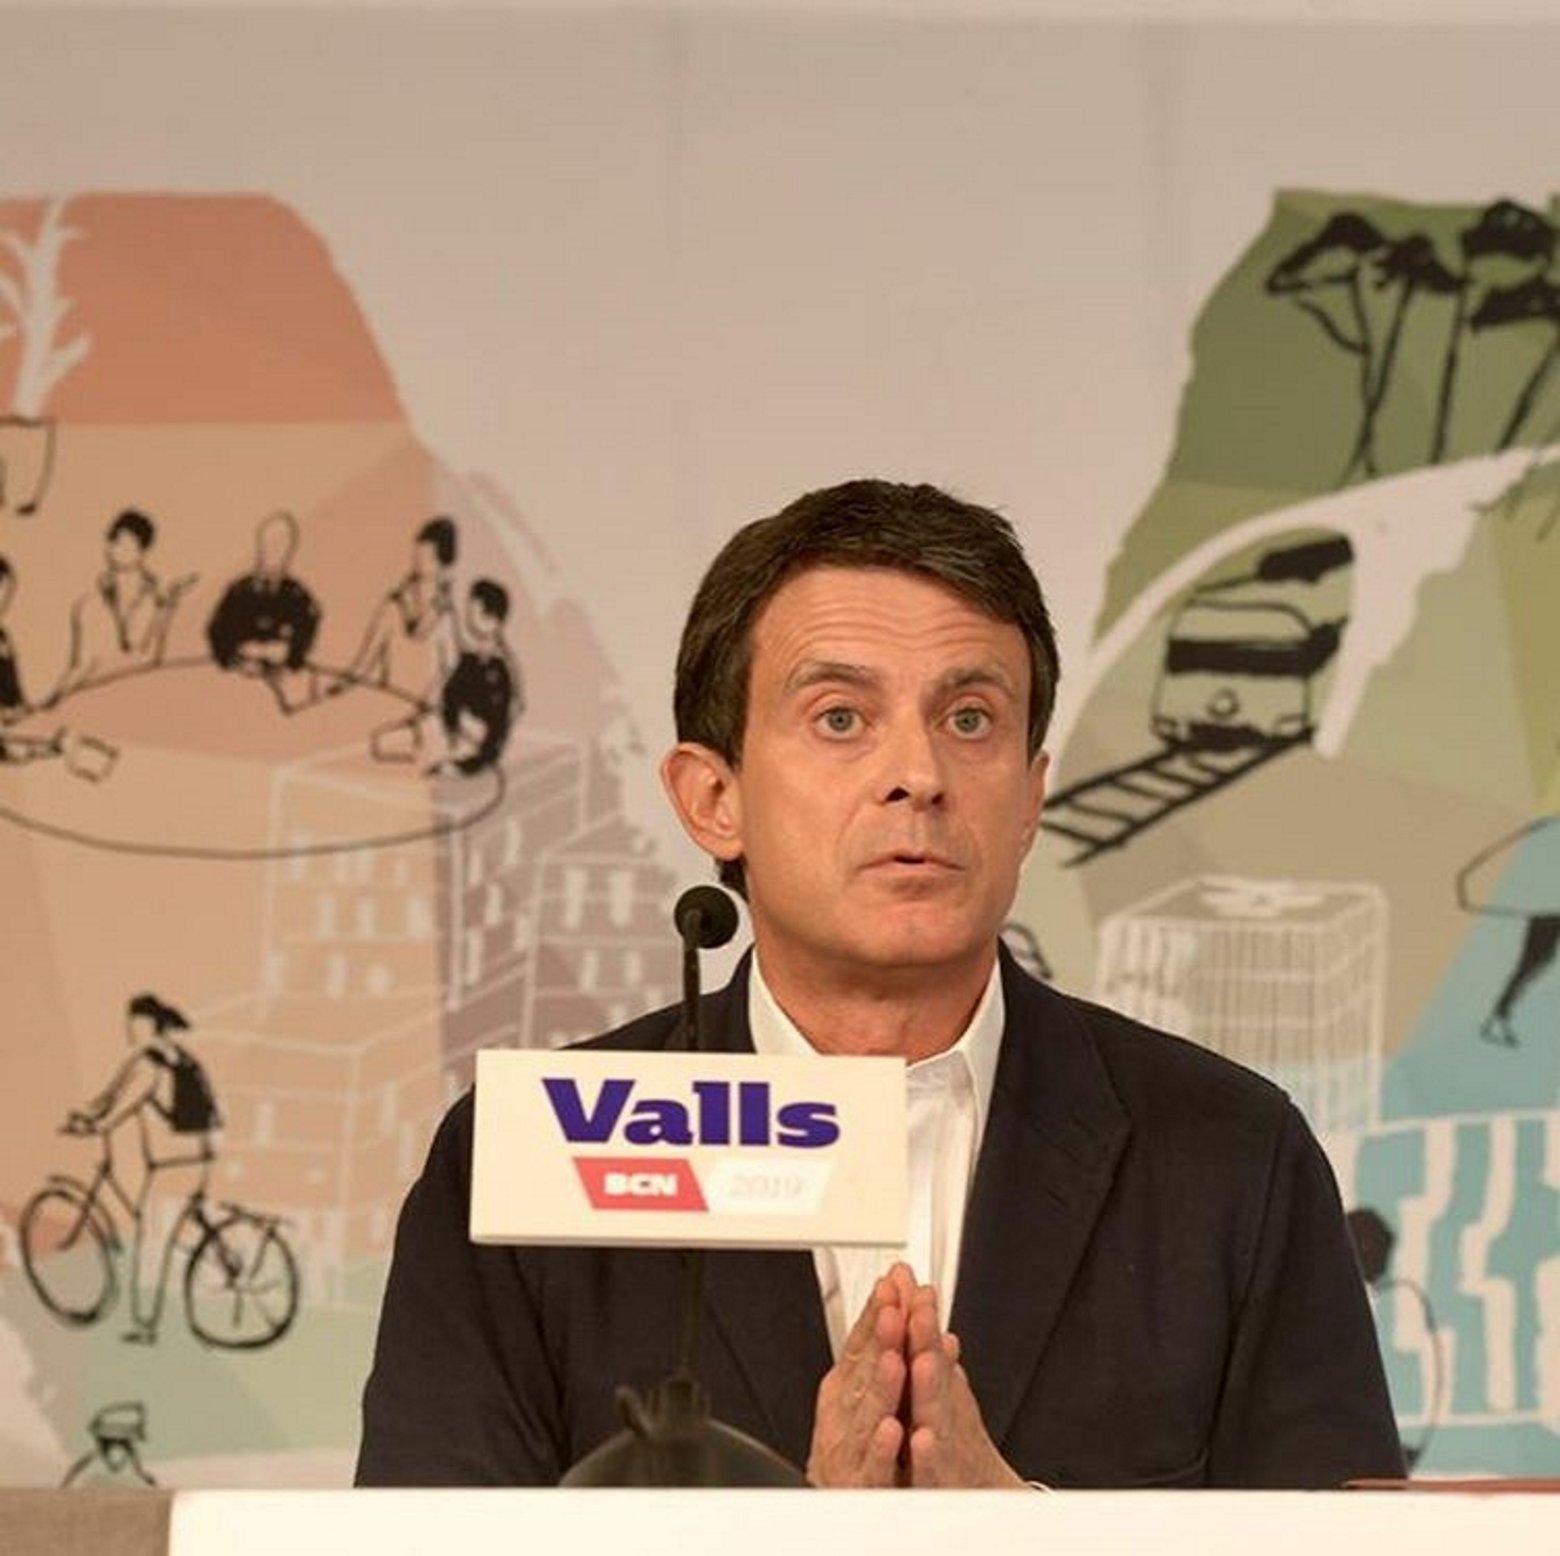 "Torna a França": Javier Negre destrossa Valls, "proindepe del braguetazo"